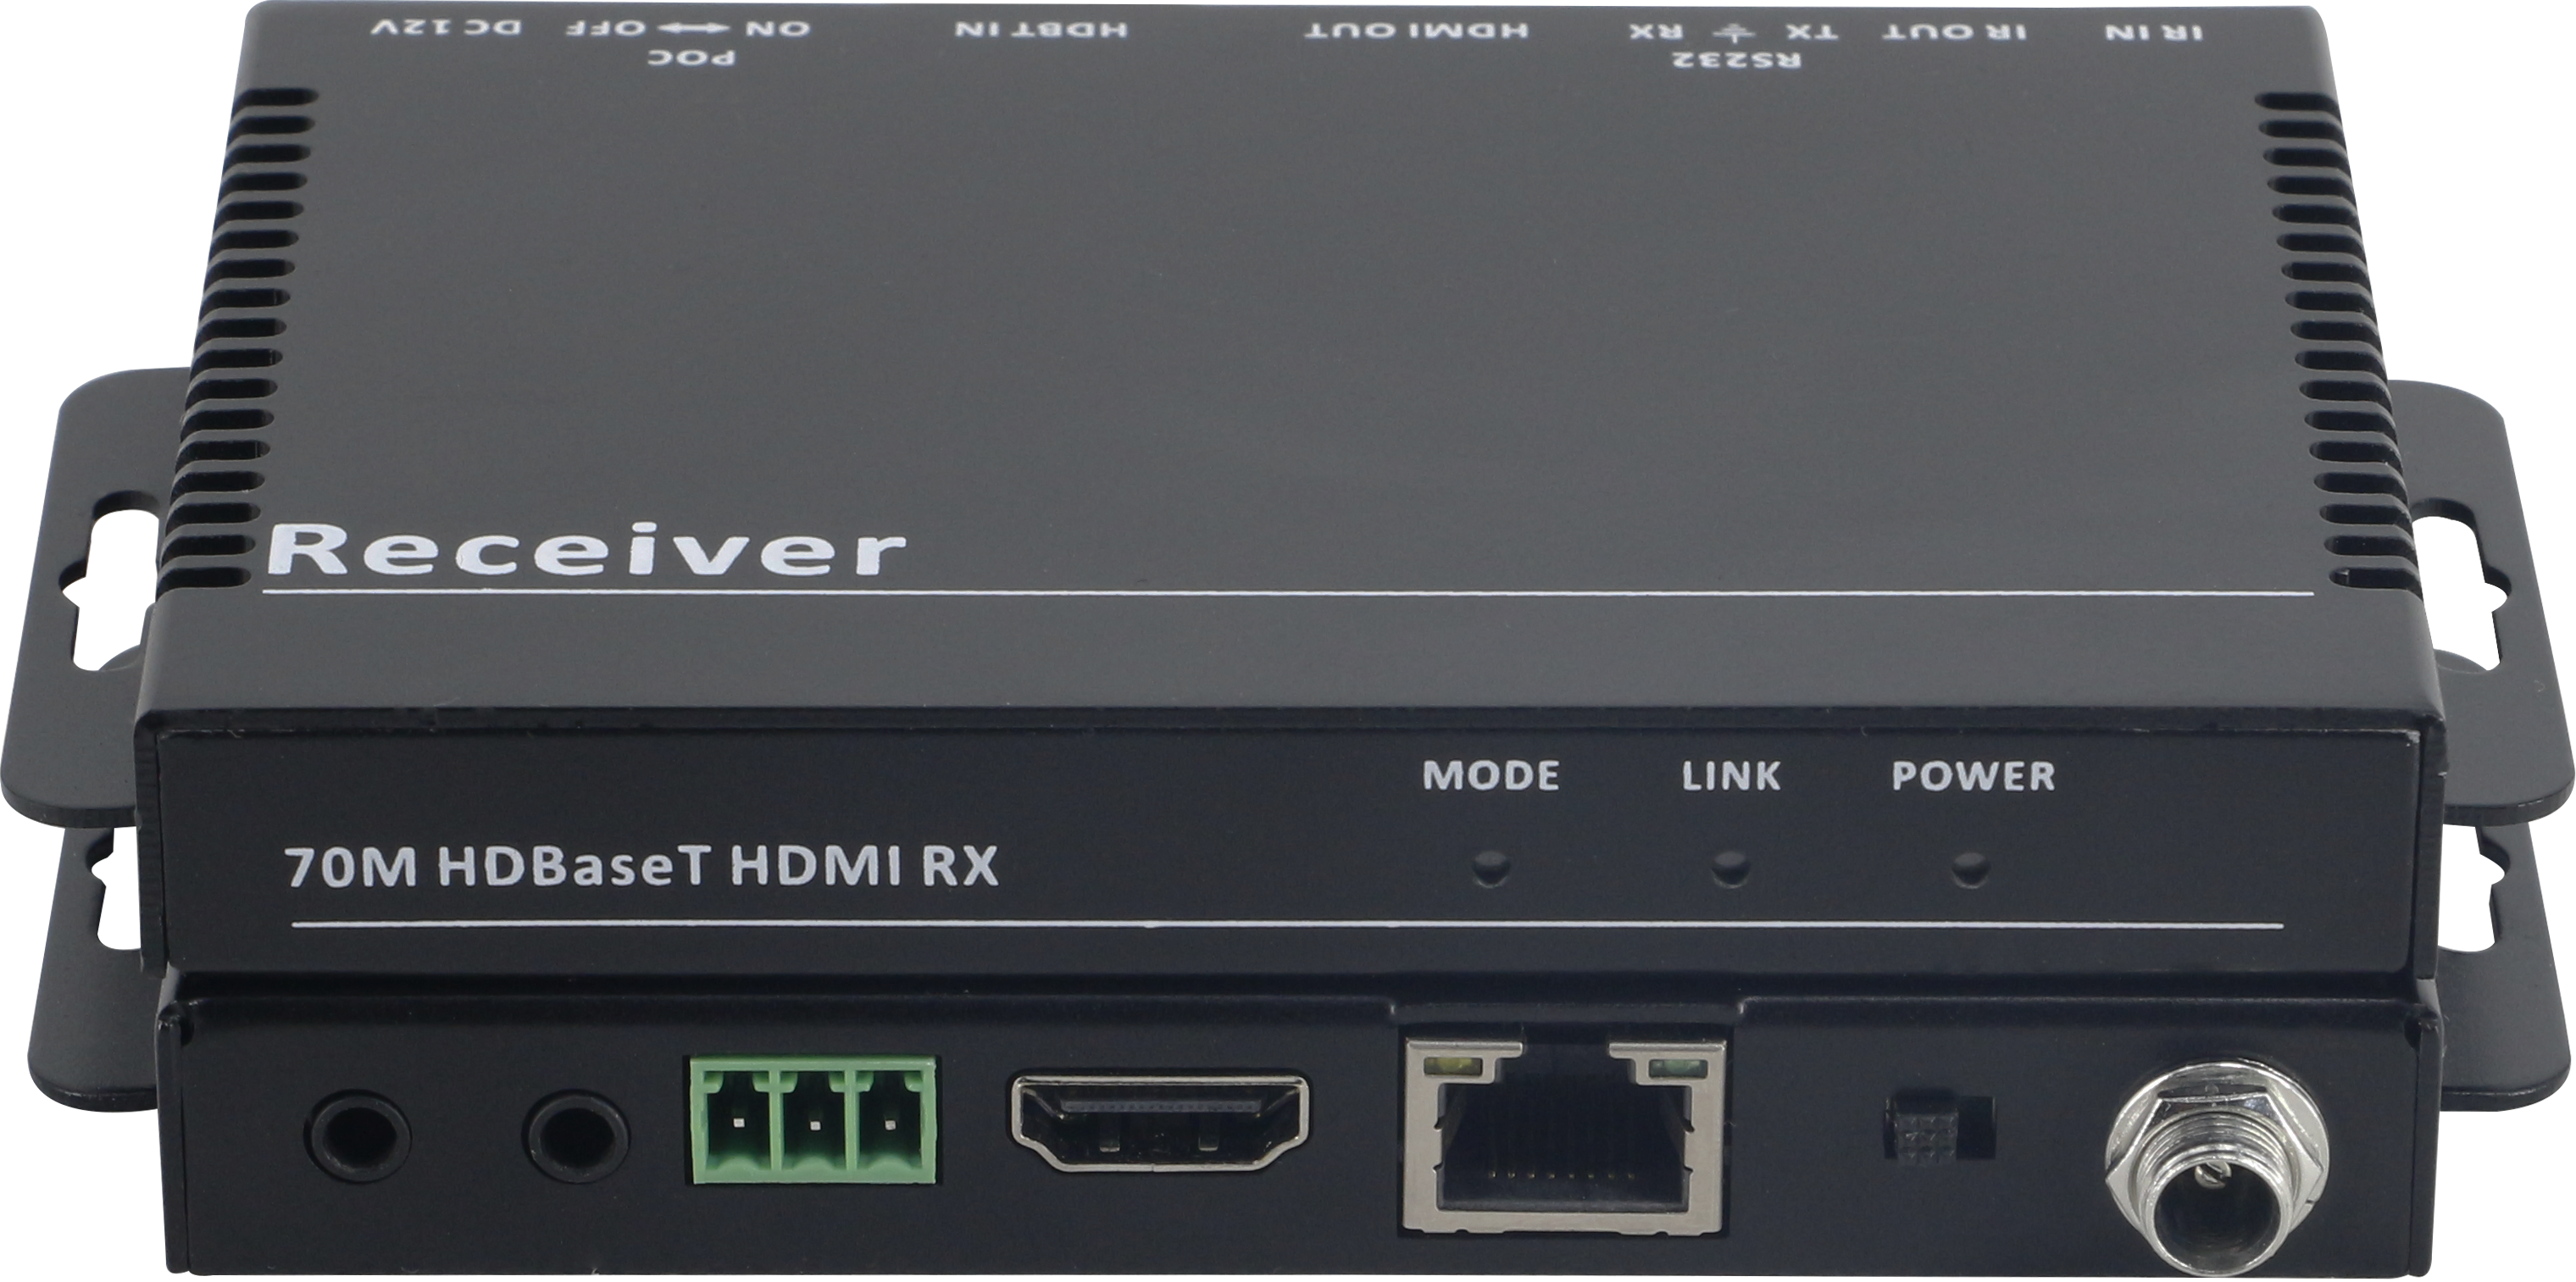 4K30 HDMI Extender HDBaseT transmitter and receiver w/ PoC